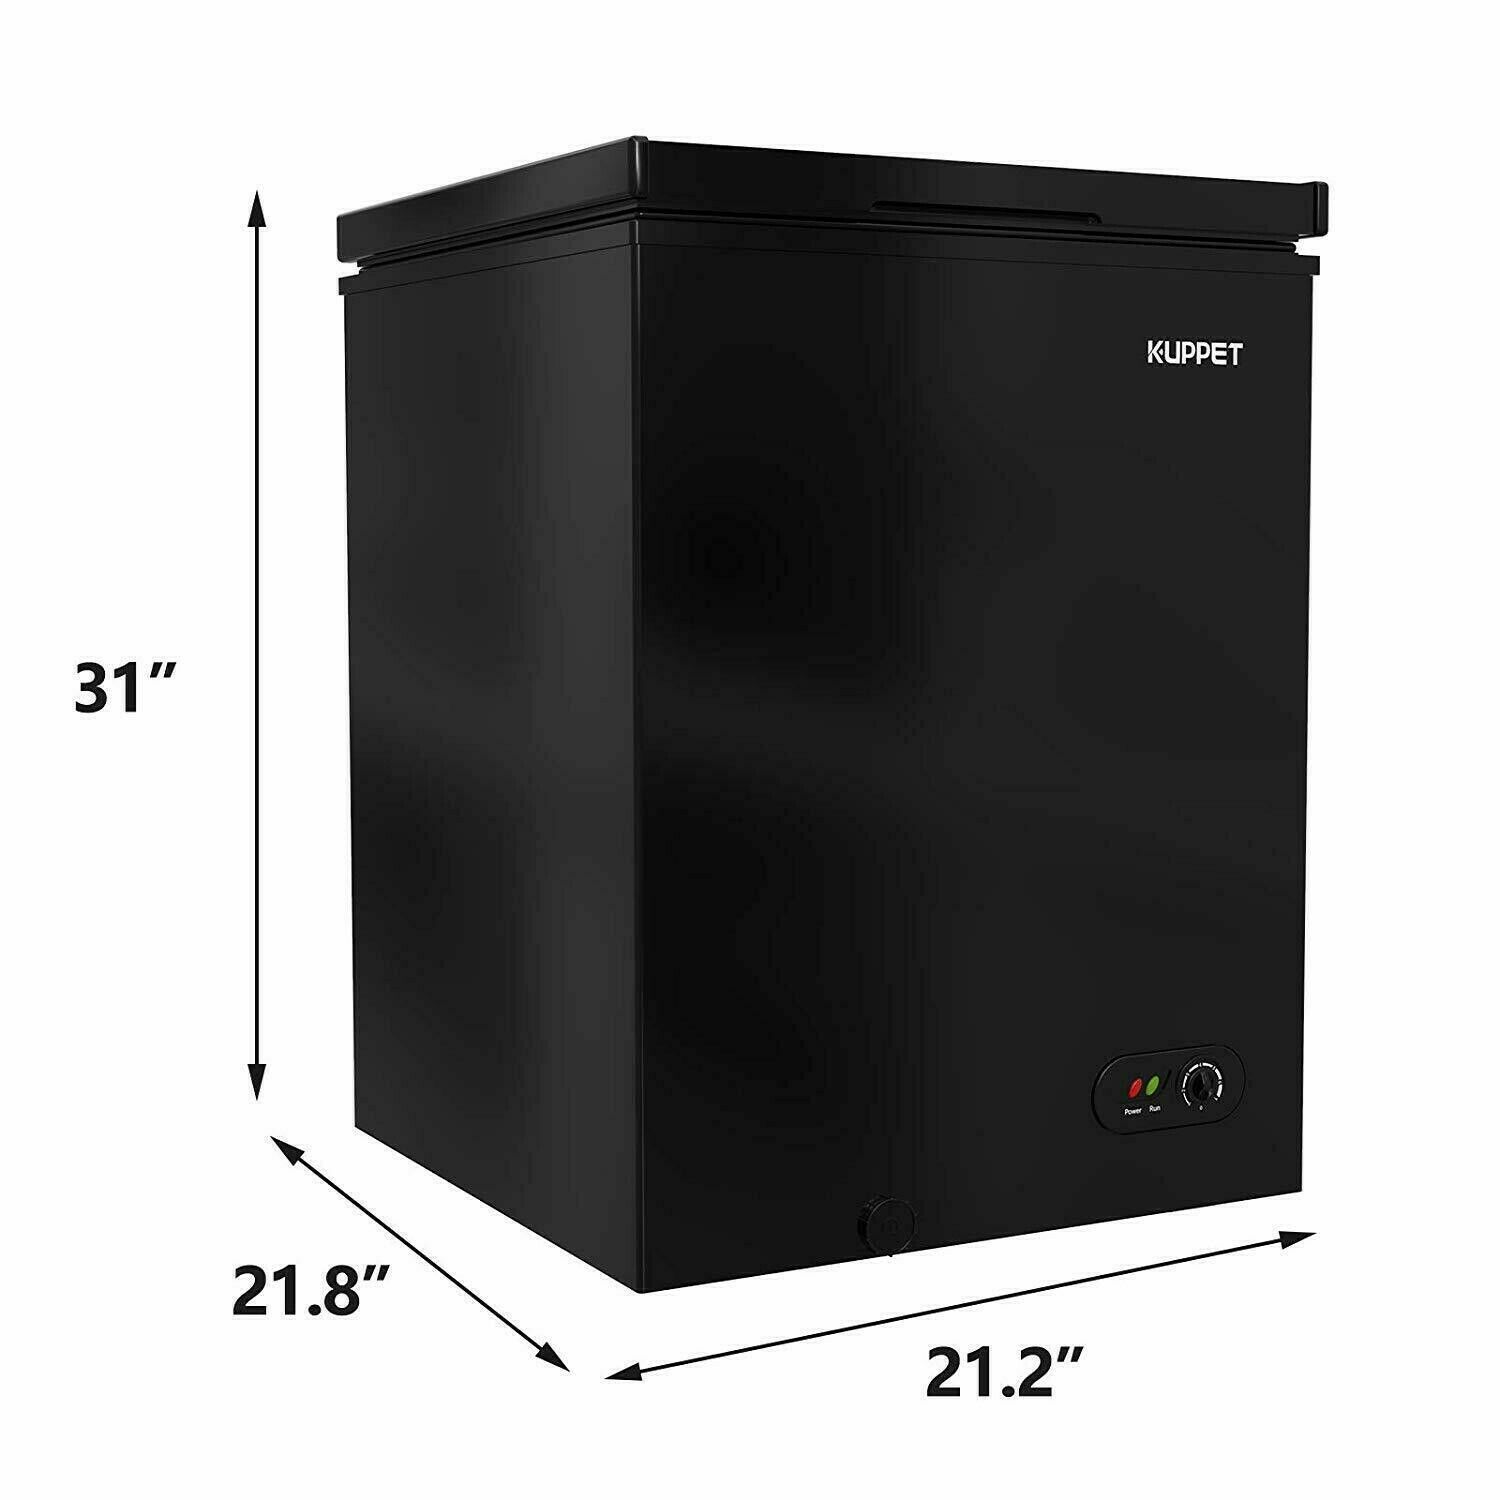 3.5 Cu Ft Compact Deep Chest Upright Freezer Storage Home Quick Defrost Black